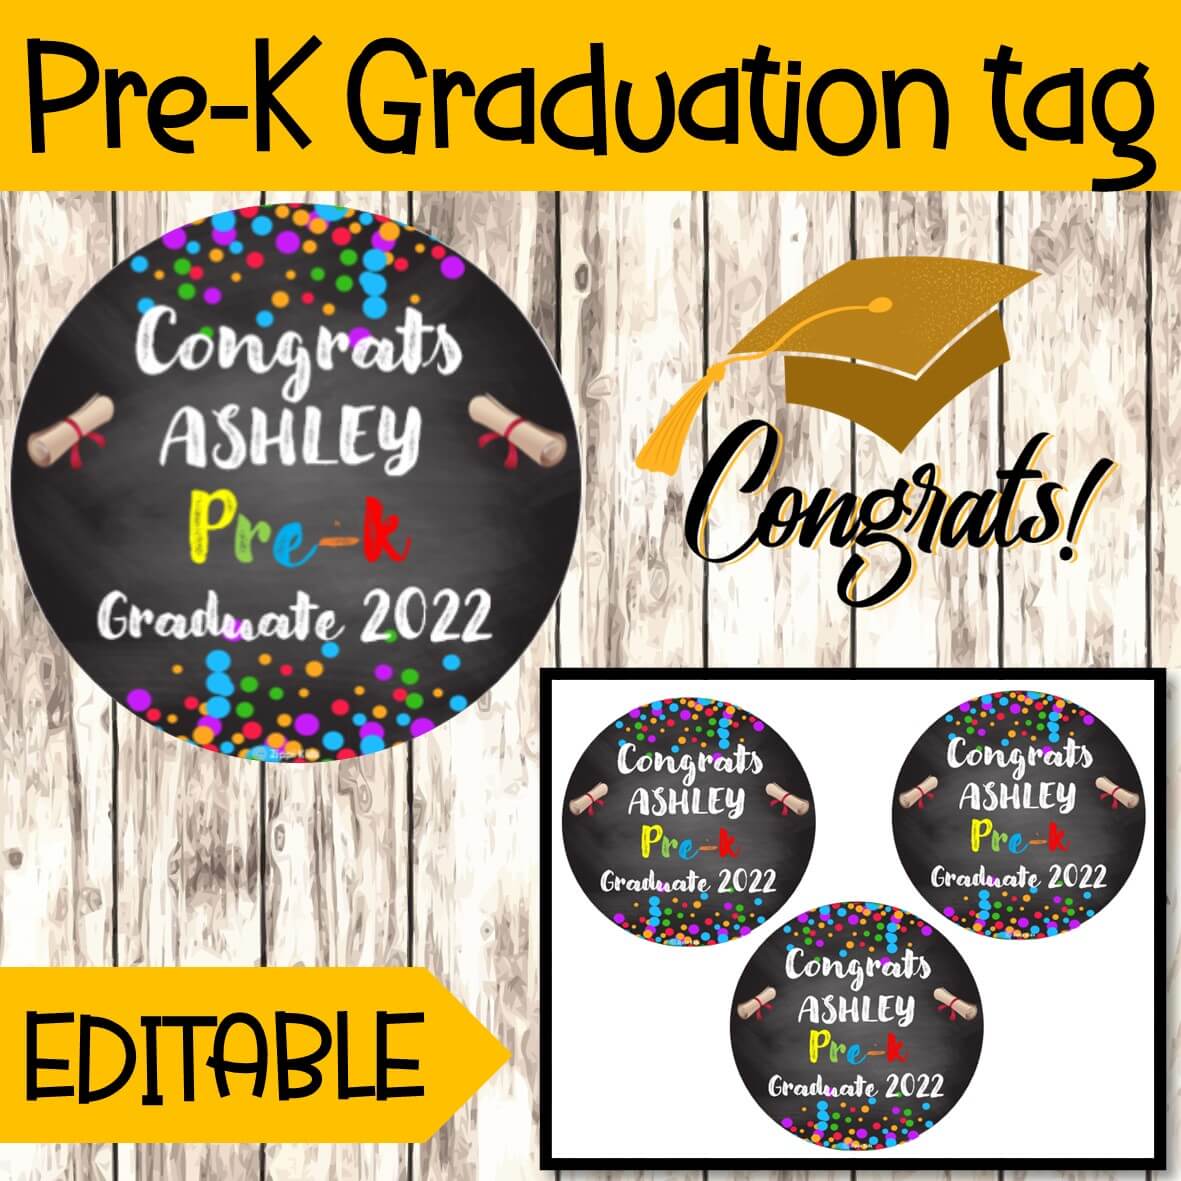 EDITABLE Pre-K Graduation Gift Tags, Congrats Pre-K Graduate tags